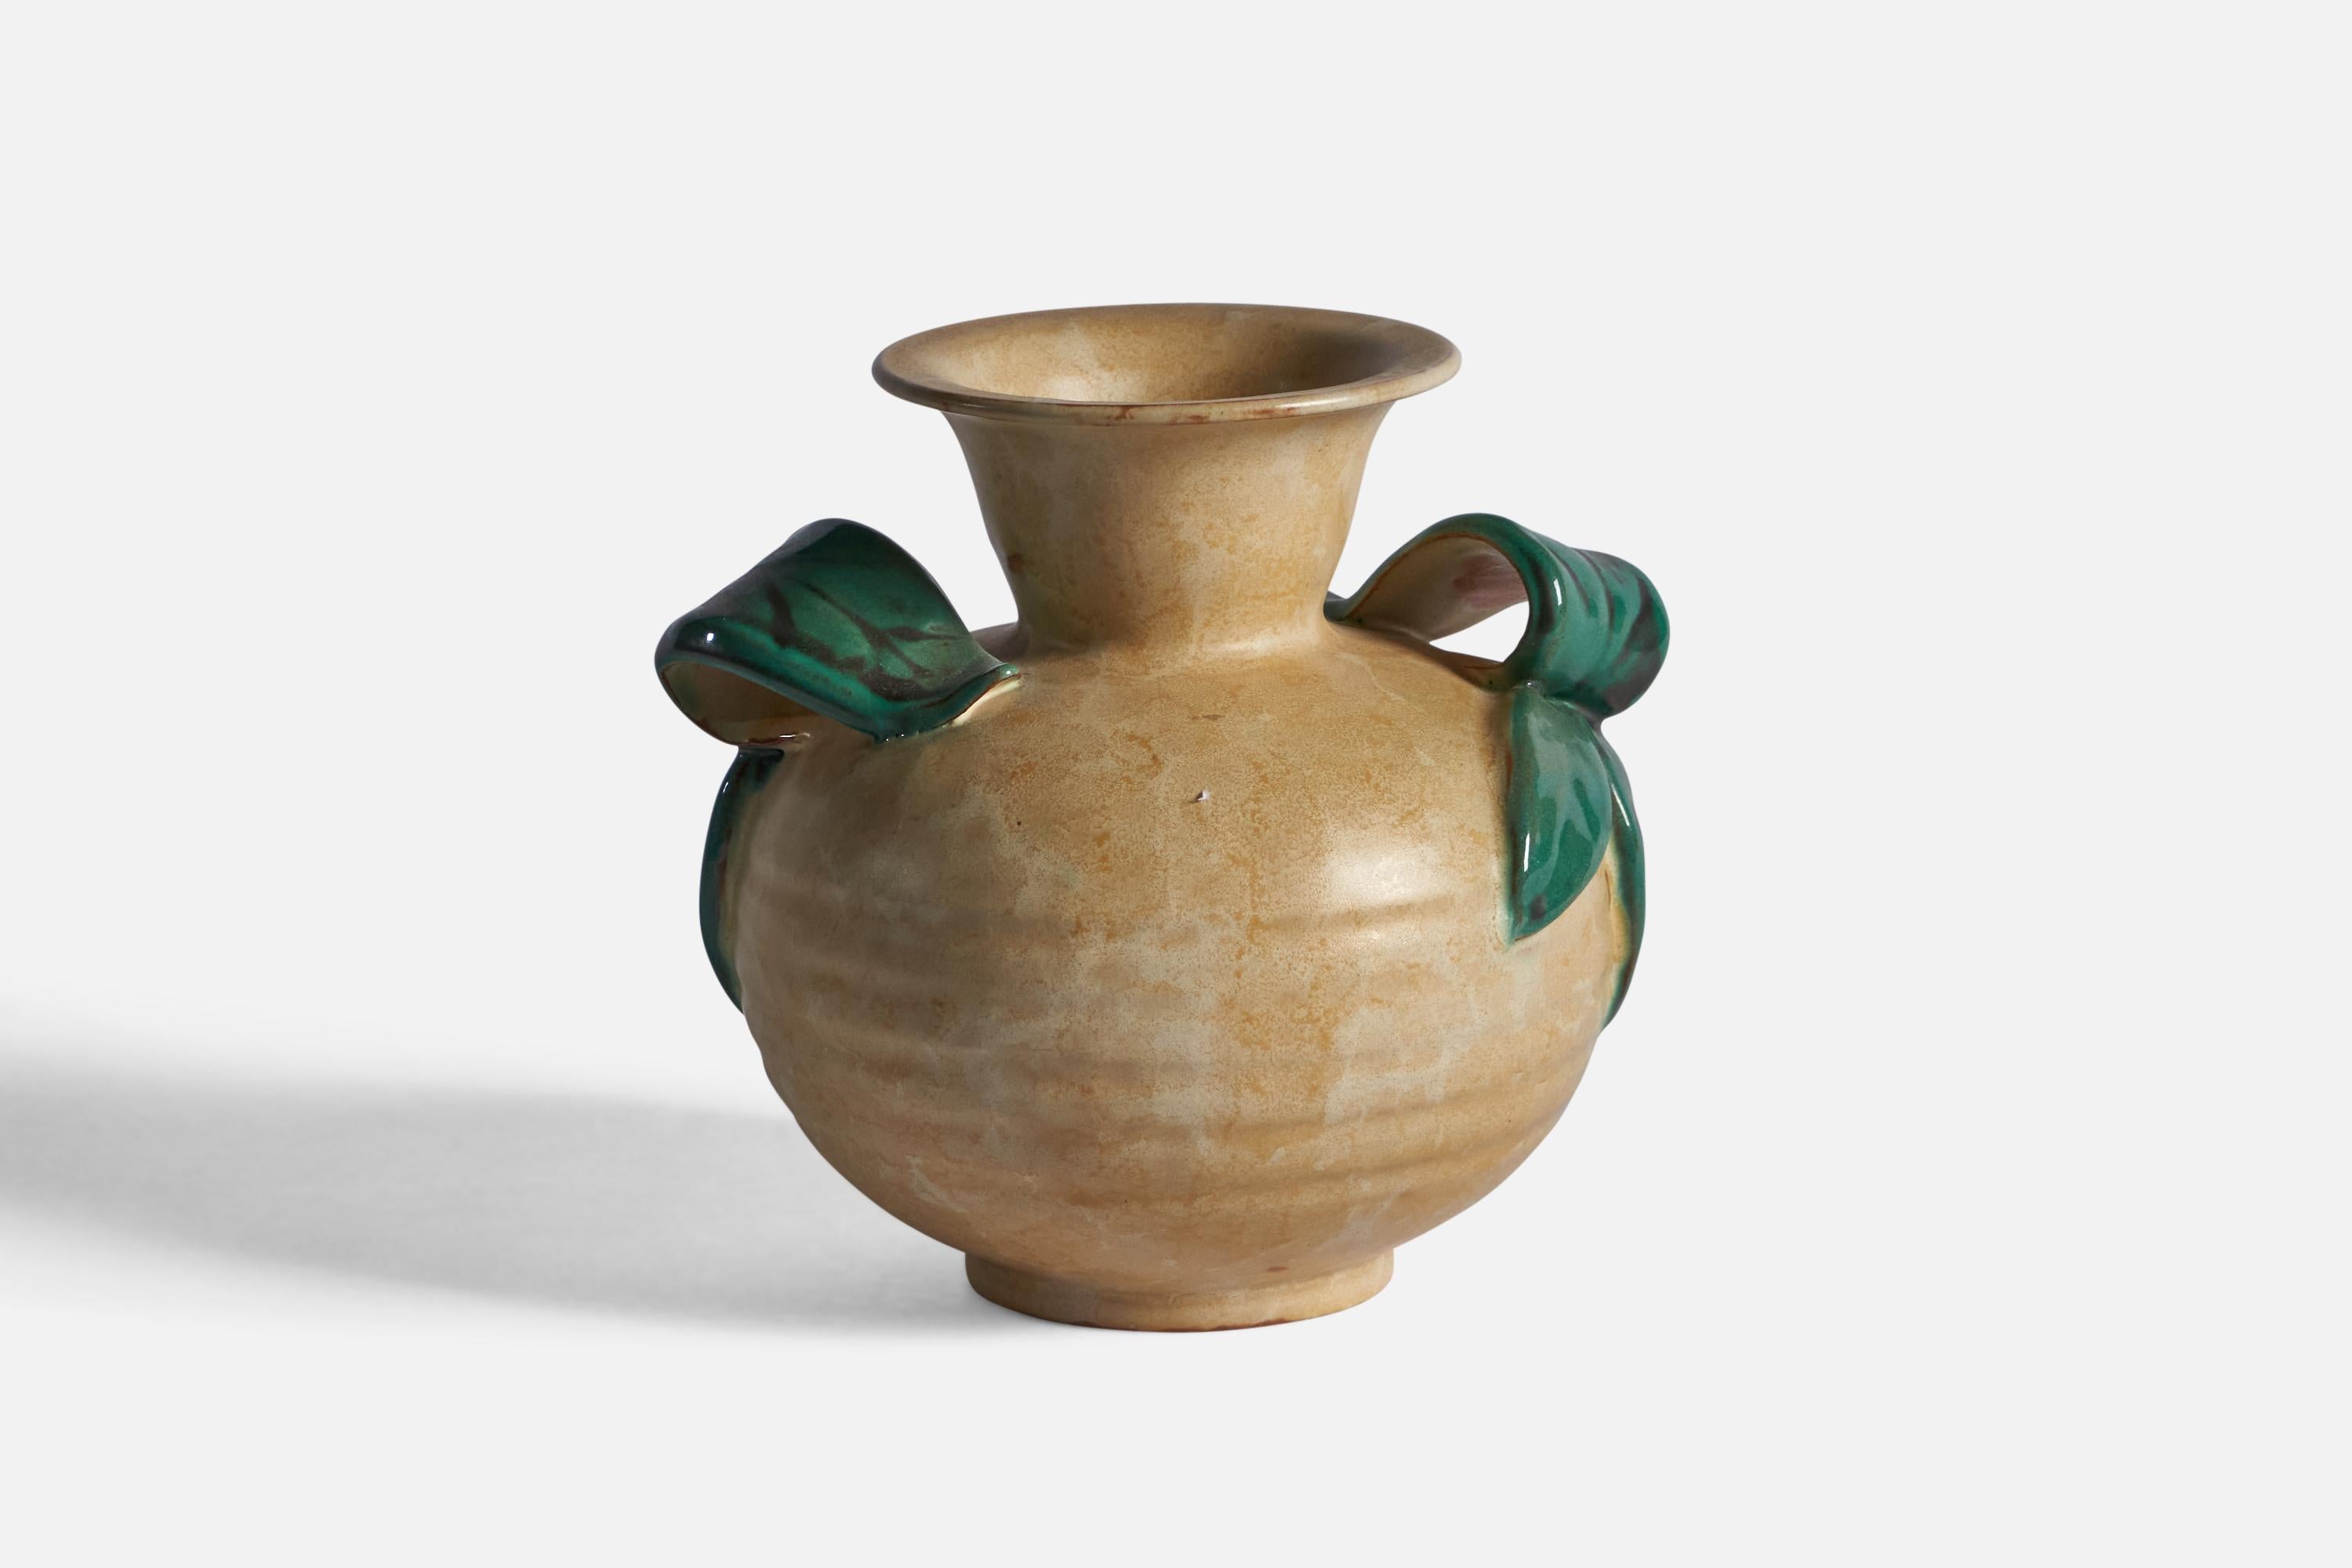 A green and beige-glazed earthenware vase, designed and produced by Upsala Ekeby, Sweden, c. 1930s.